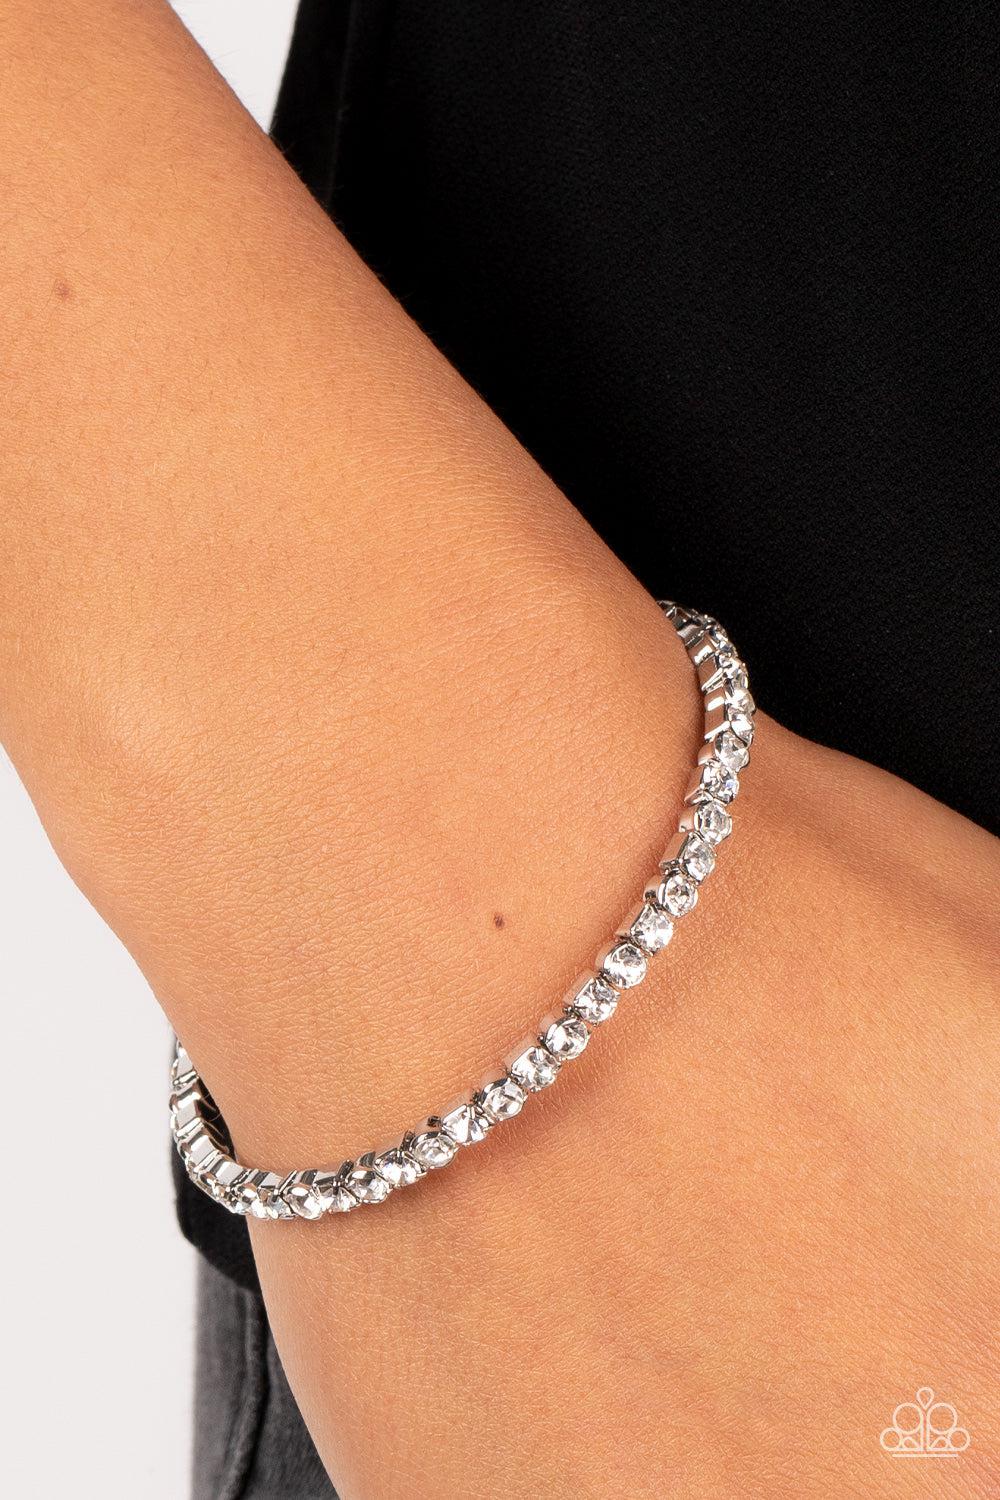 Rhinestone Spell White Bracelet - Paparazzi Accessories-on model - CarasShop.com - $5 Jewelry by Cara Jewels